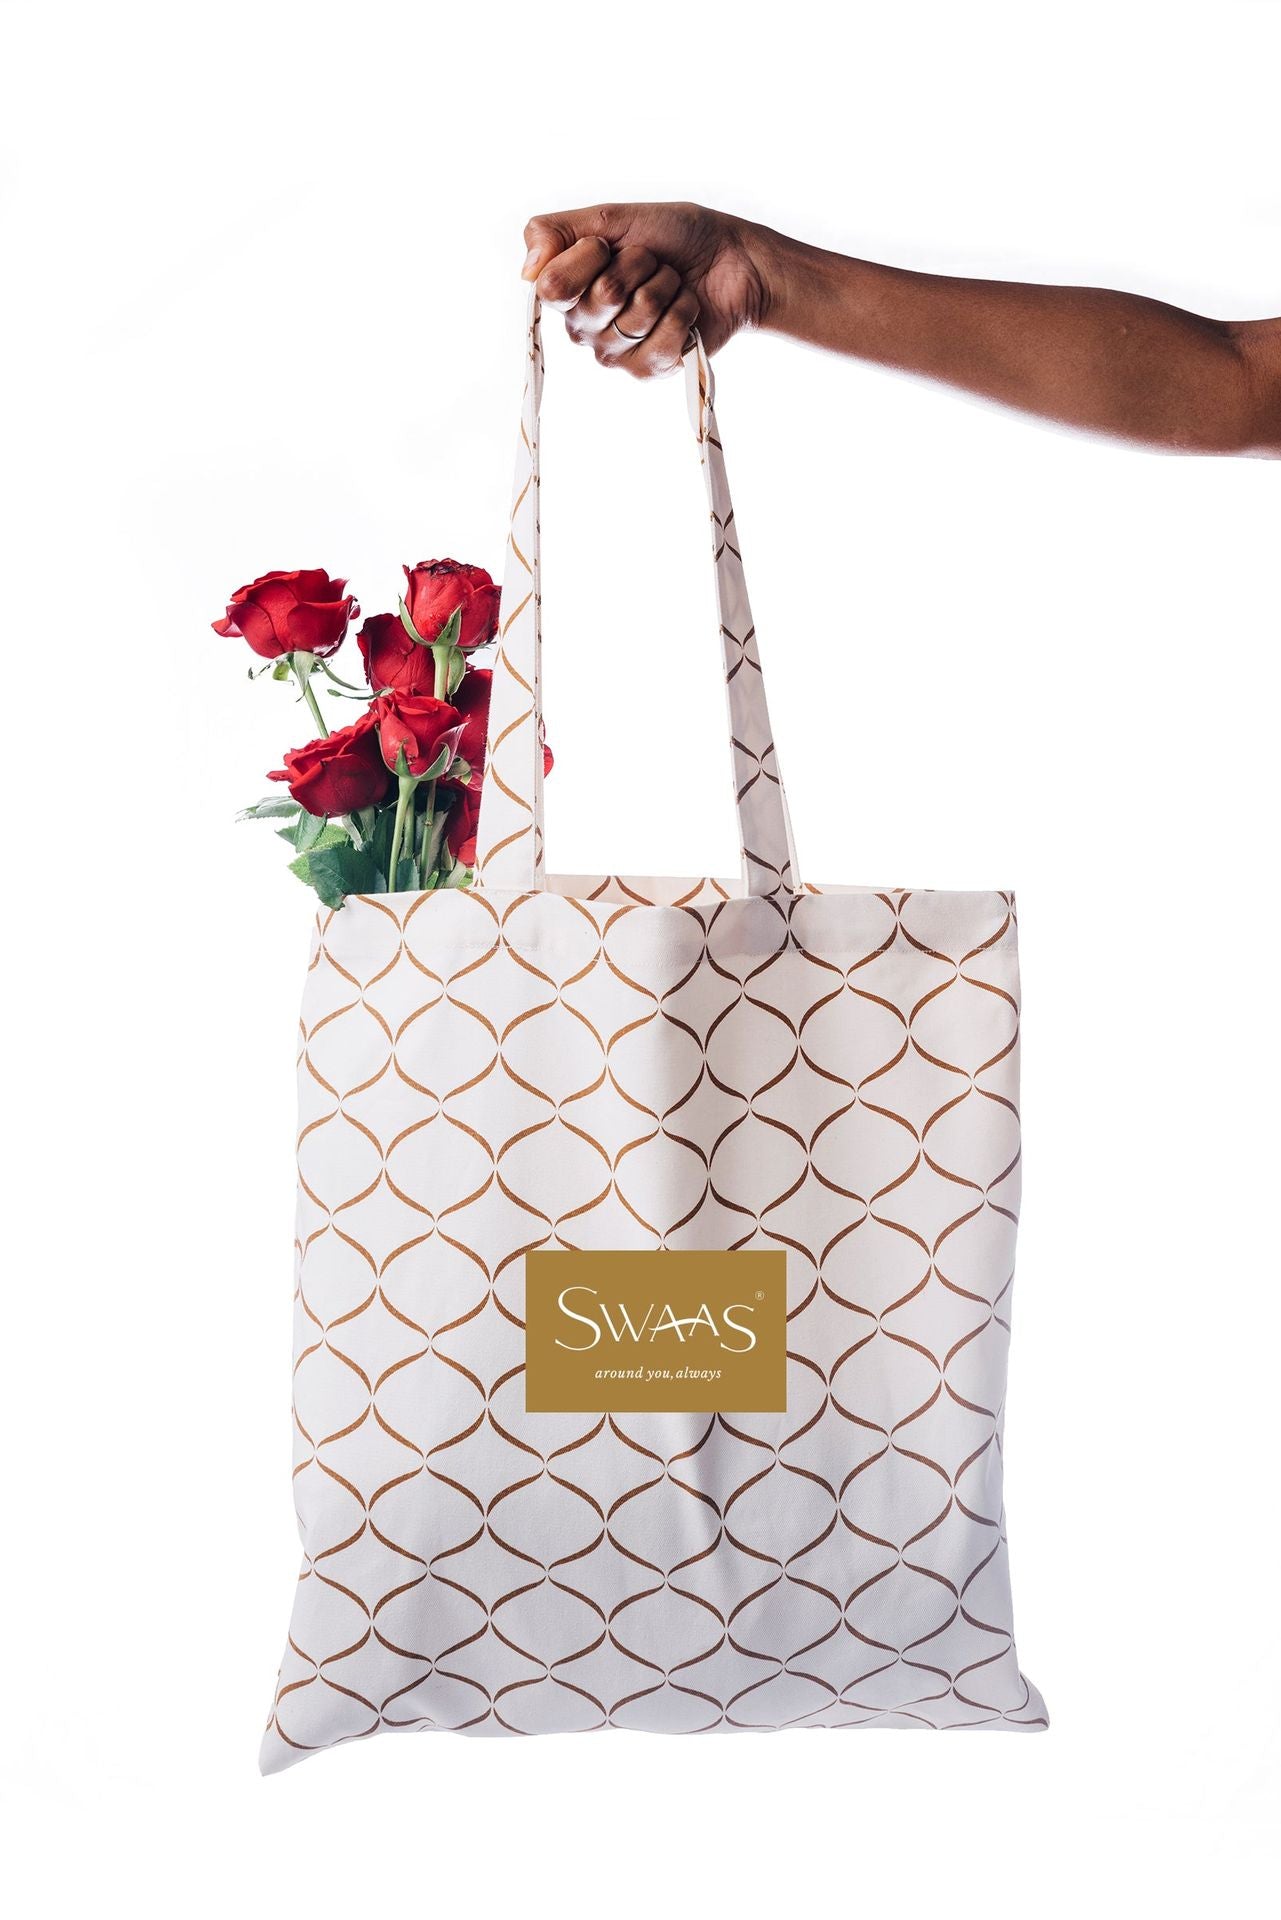 Swaas 100% Cotton Splash-Proof Ivory/Gold Tote Bag for Women - hfnl!fe